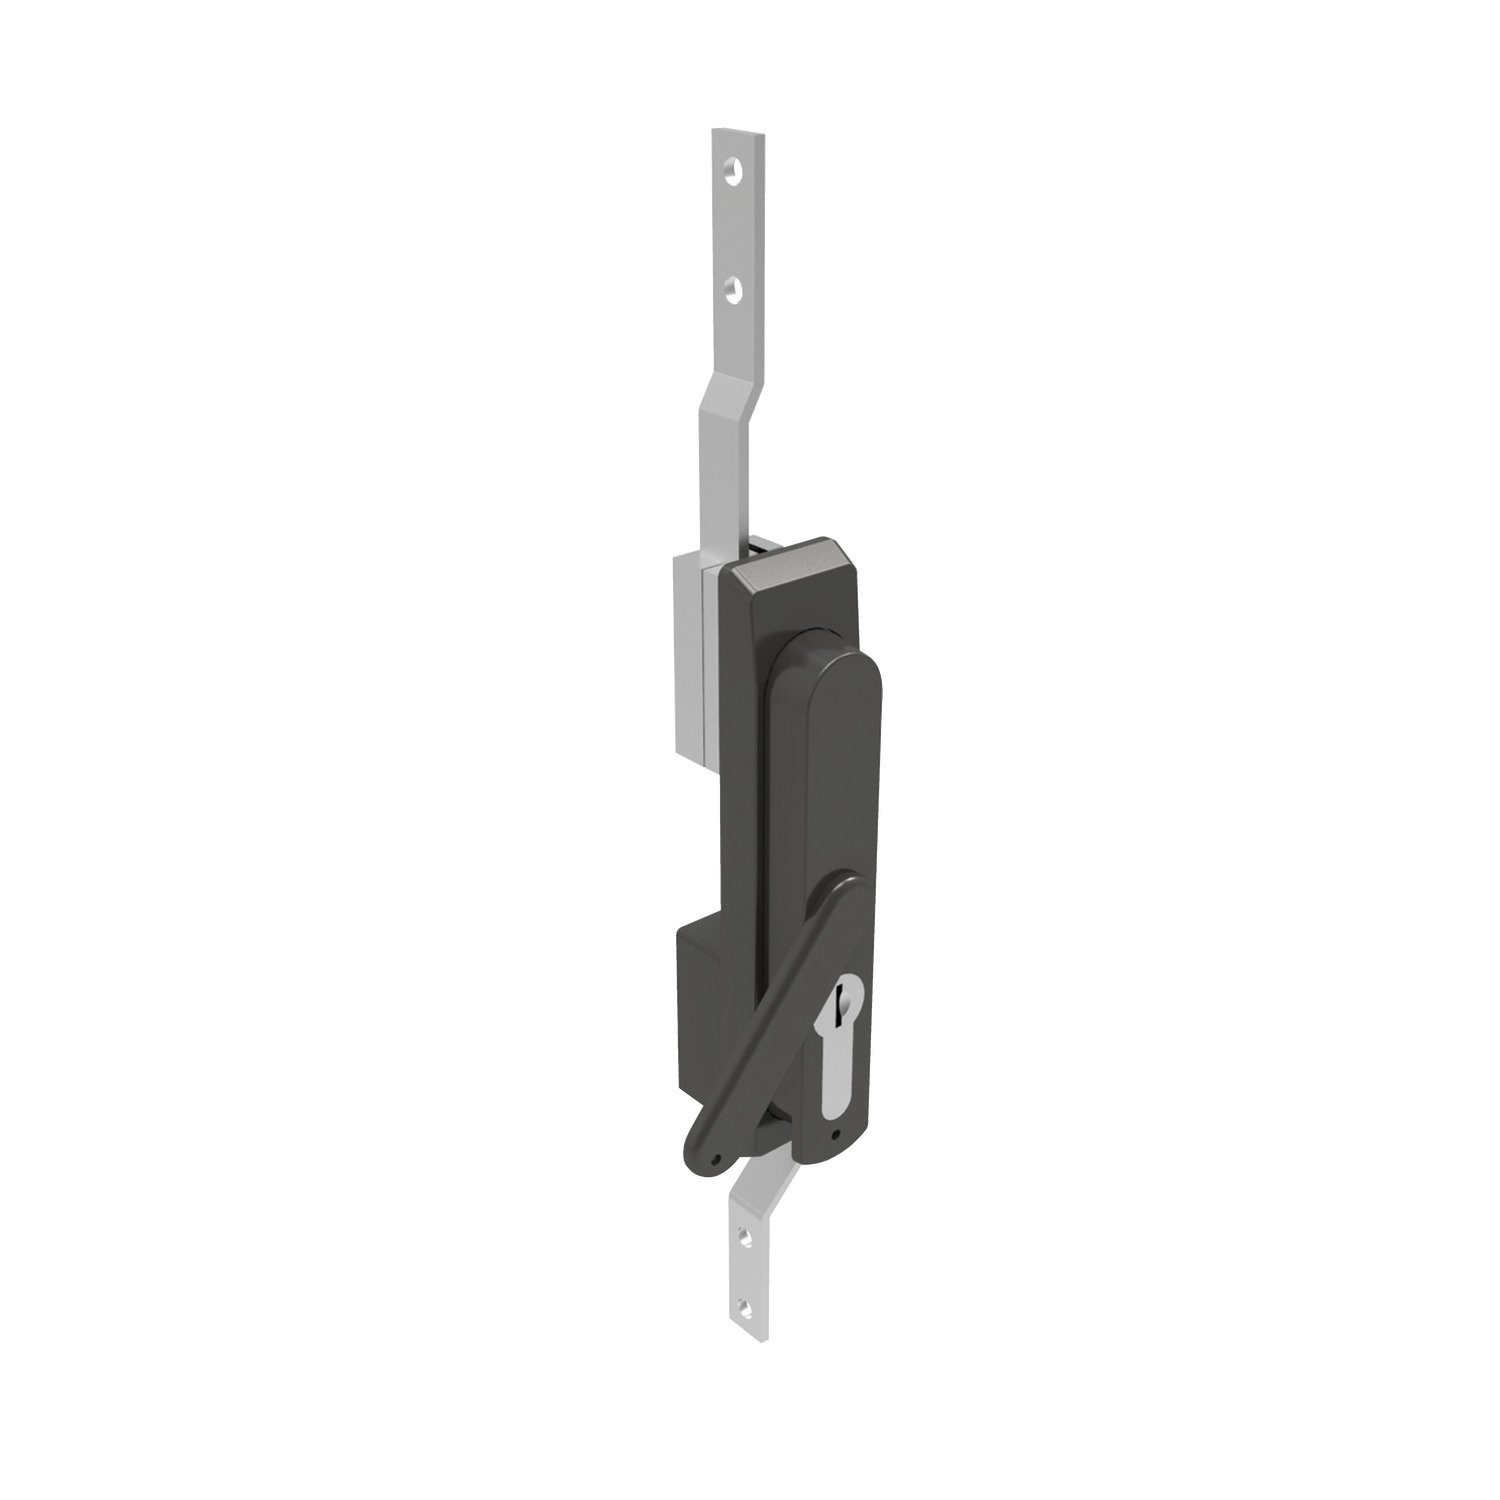 B2082.AW0320 Swing Handles - Plastic 3 point latching -  rod control plus cam, padlockable